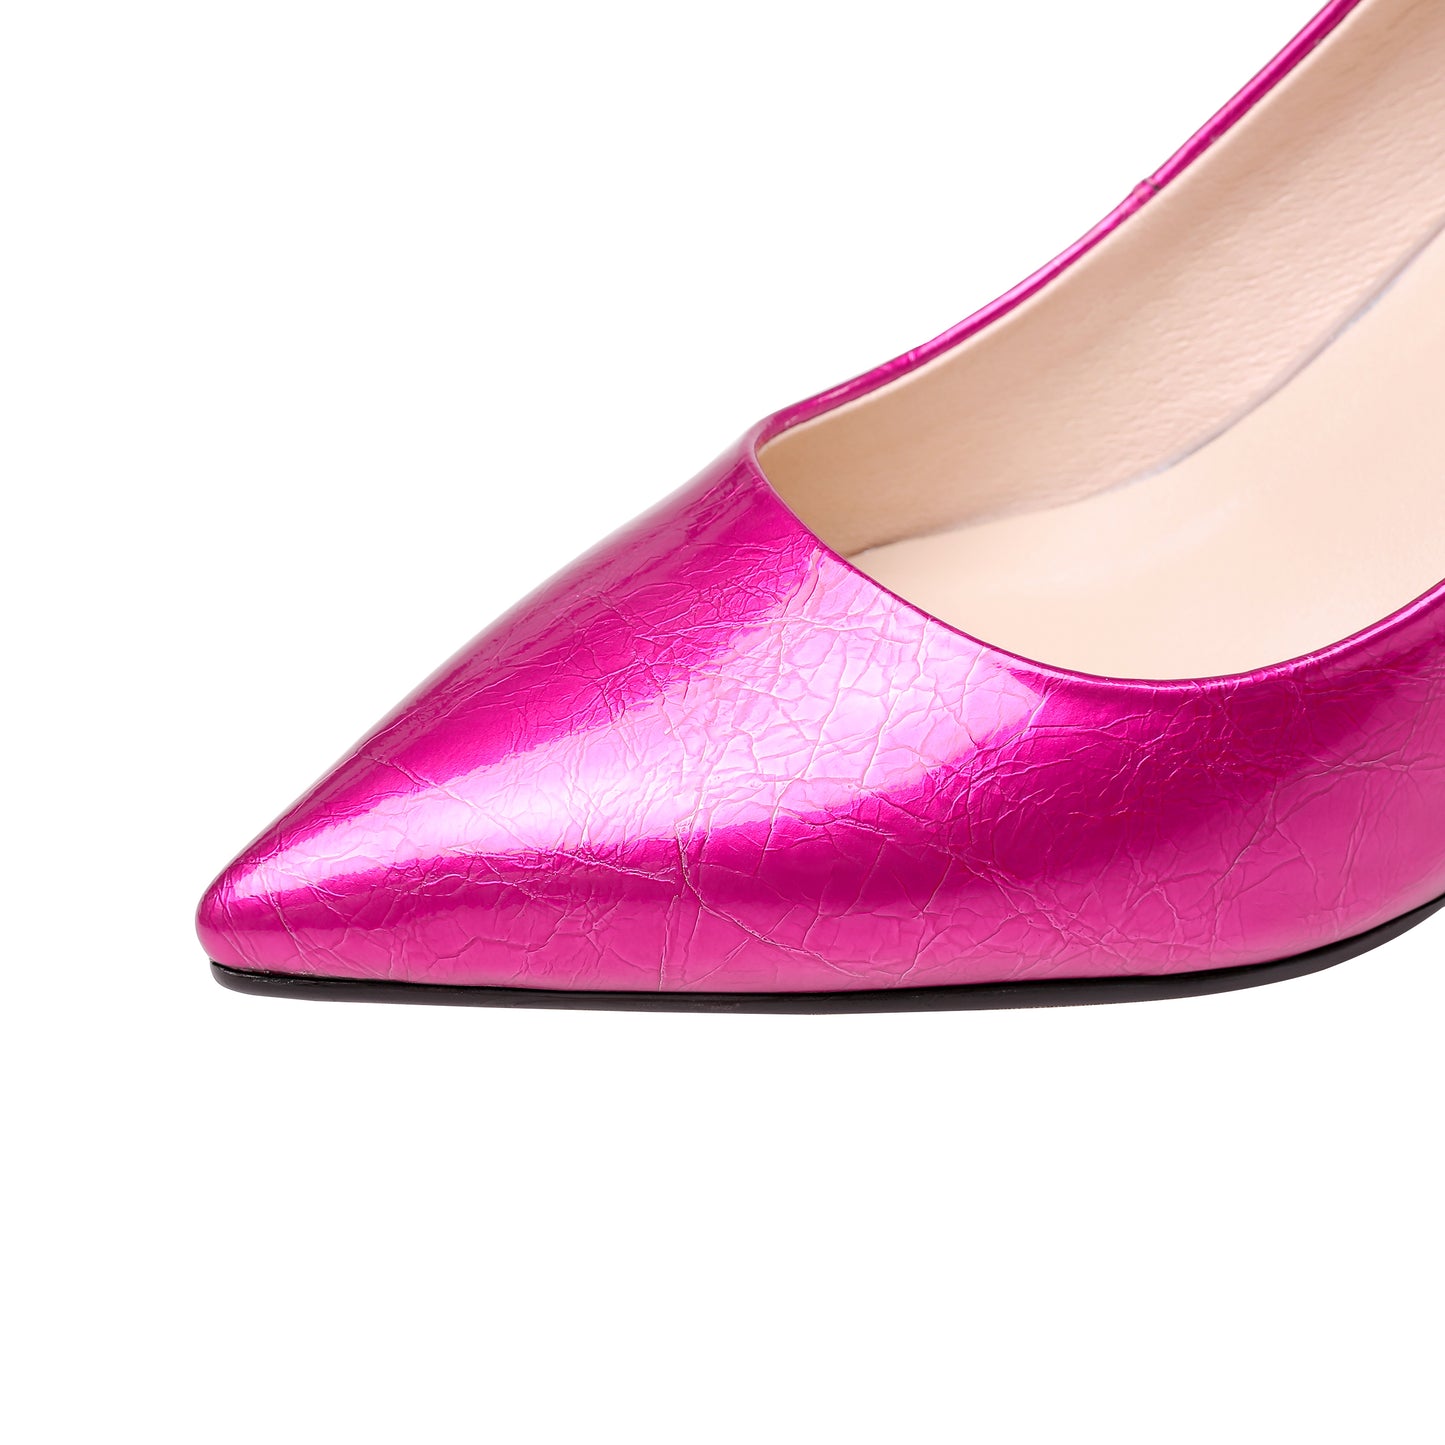 TinaCus Women's Handmade Glossy Patent Leather Sexy Kitten Heel Pointed Toe Glitter Elegant Pumps